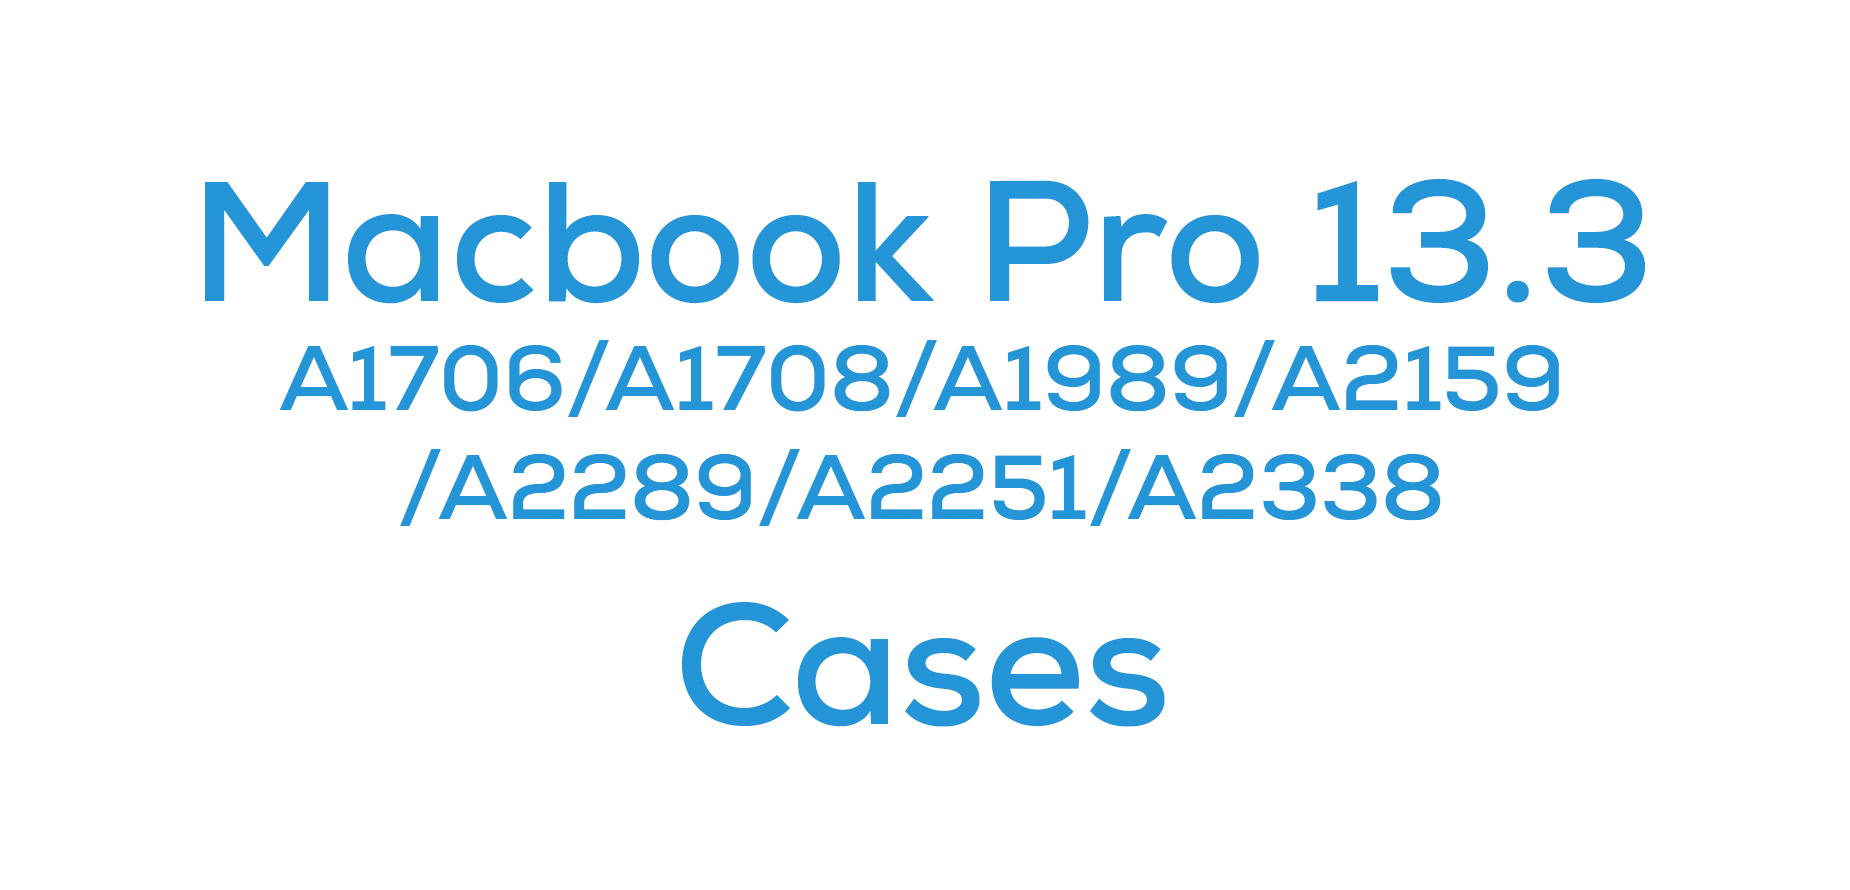 Macbook Pro 13.3 (A1706/A1708/A1989/A2159/A2289/A2251/A2338)